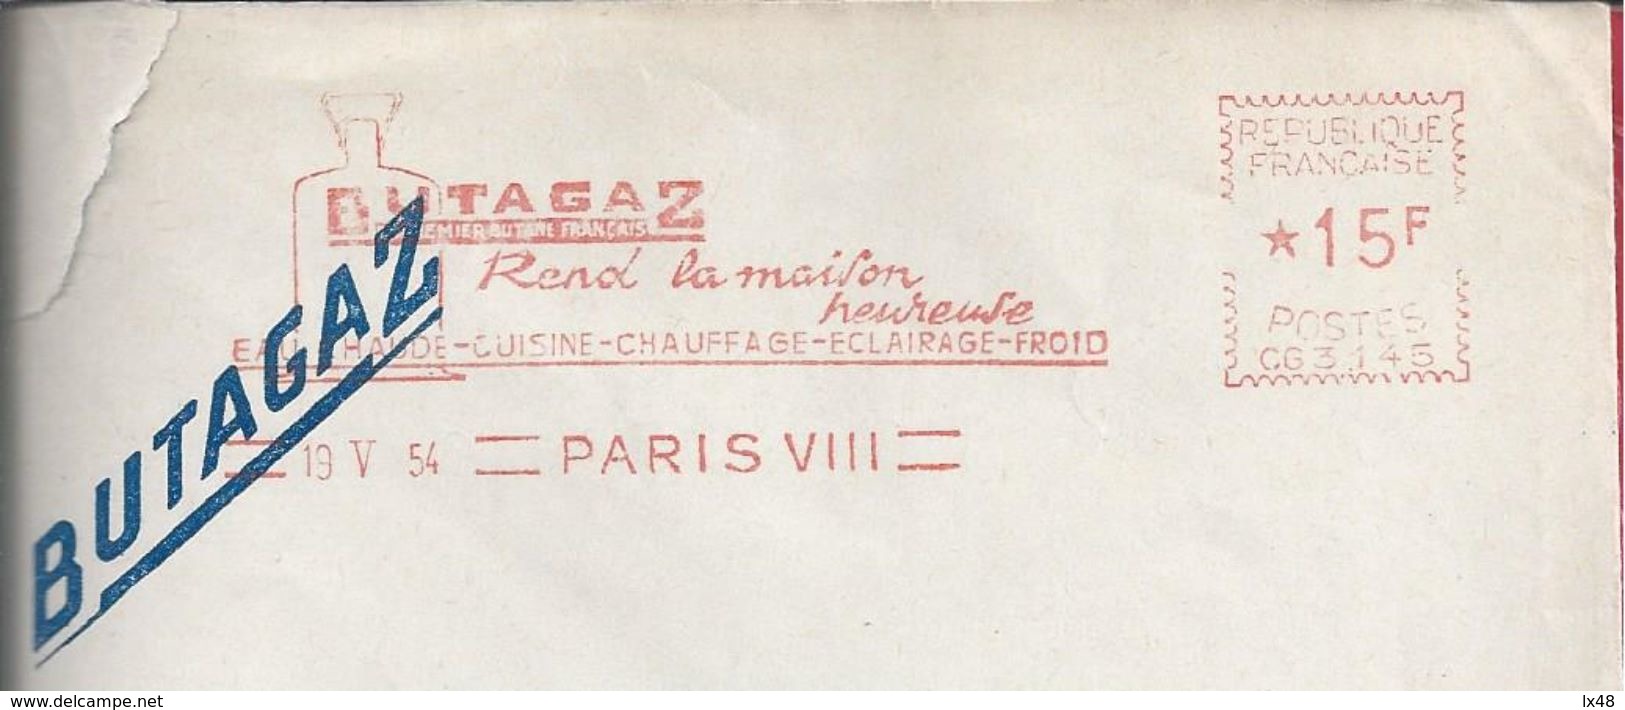 Butagaz.Bottle Gas.Butagaz.Gasflasche.Gassflasken.Mechanical Franchise Circulated In Paris In 1954.2scn.Rare. - Gaz